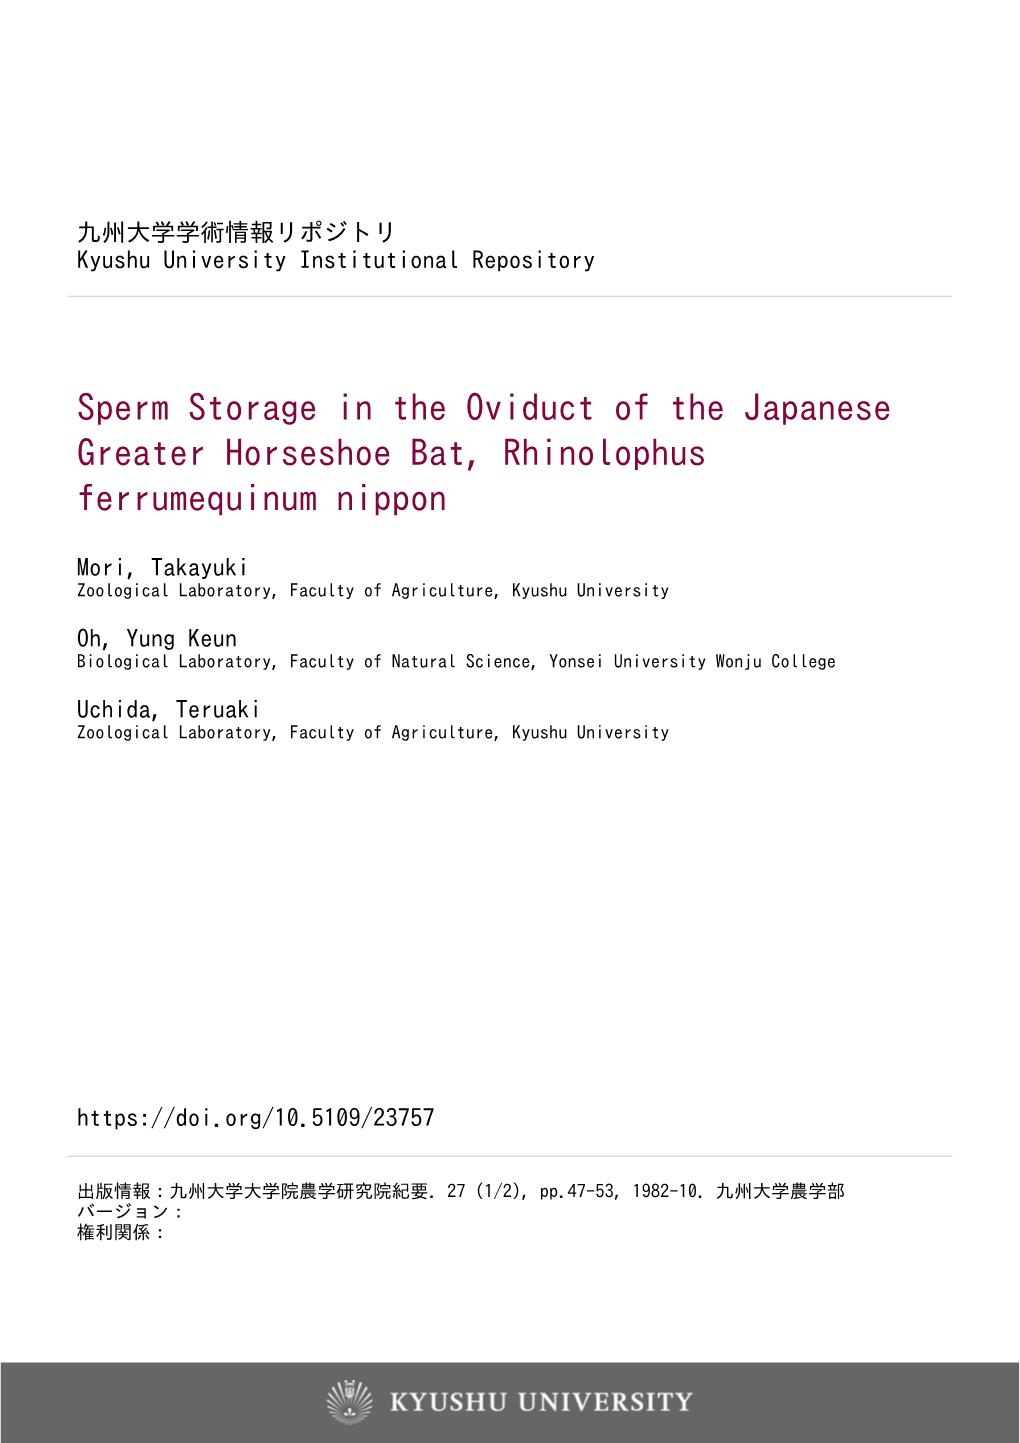 Sperm Storage in the Oviduct of the Japanese Greater Horseshoe Bat, Rhinolophus Ferrumequinum Nippon